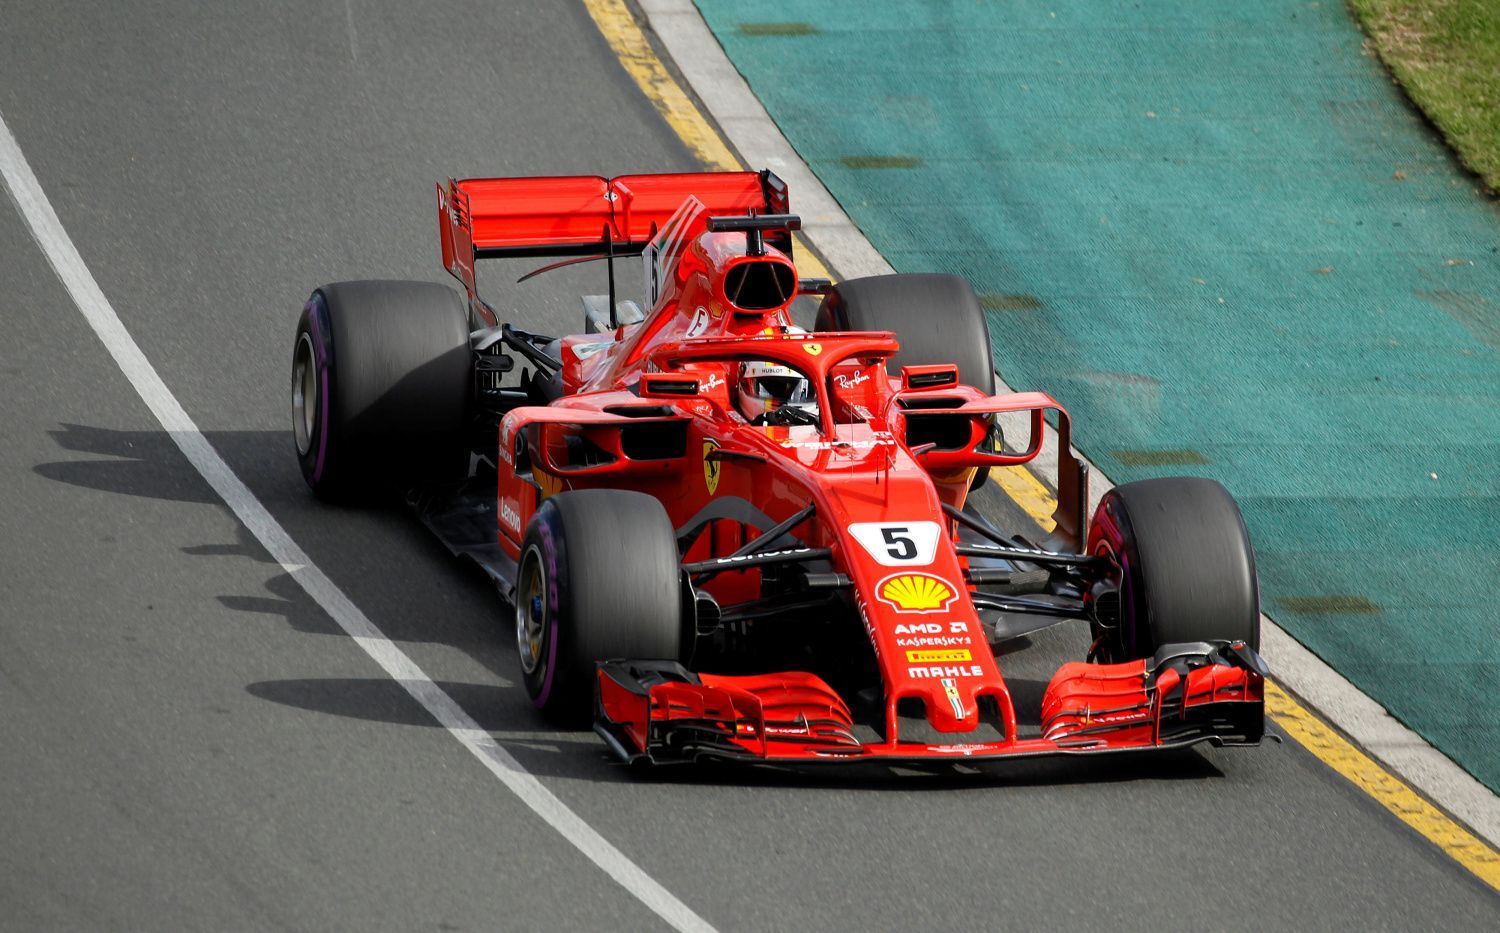 F1 VC Austrálie 2018: Sebastian Vettel, Ferrari